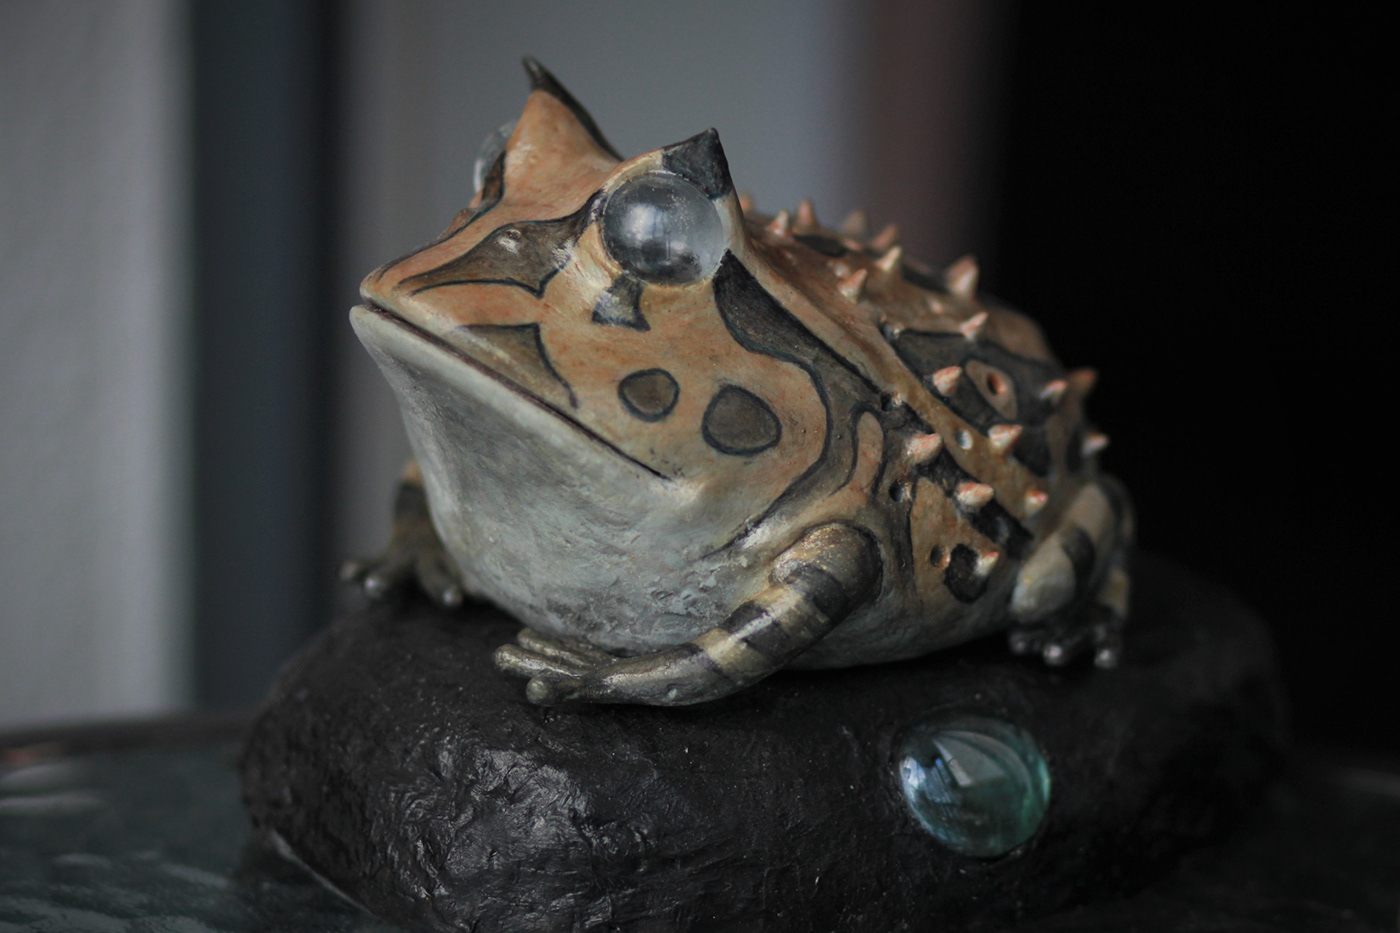 frog frogs lighting lamps sculpture art handmade crafting Bedroom interior bedside lamp pacman frog